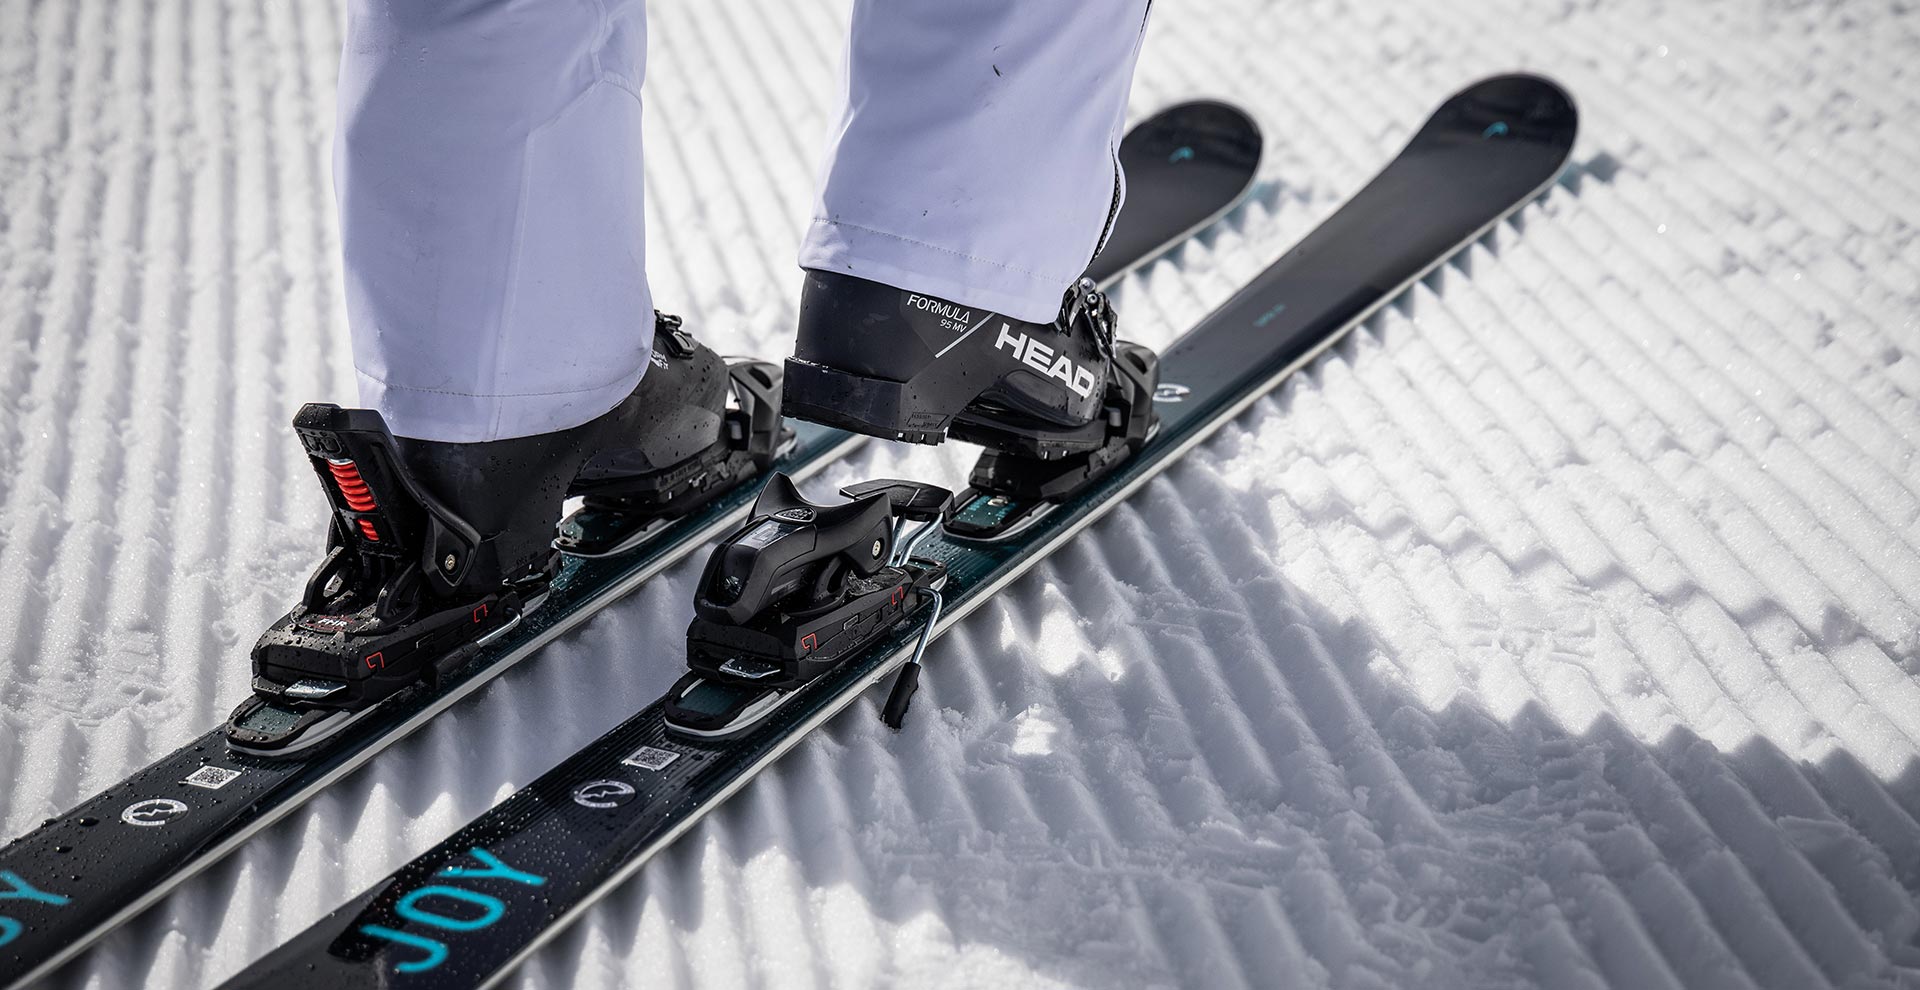 How to choose ski bindings